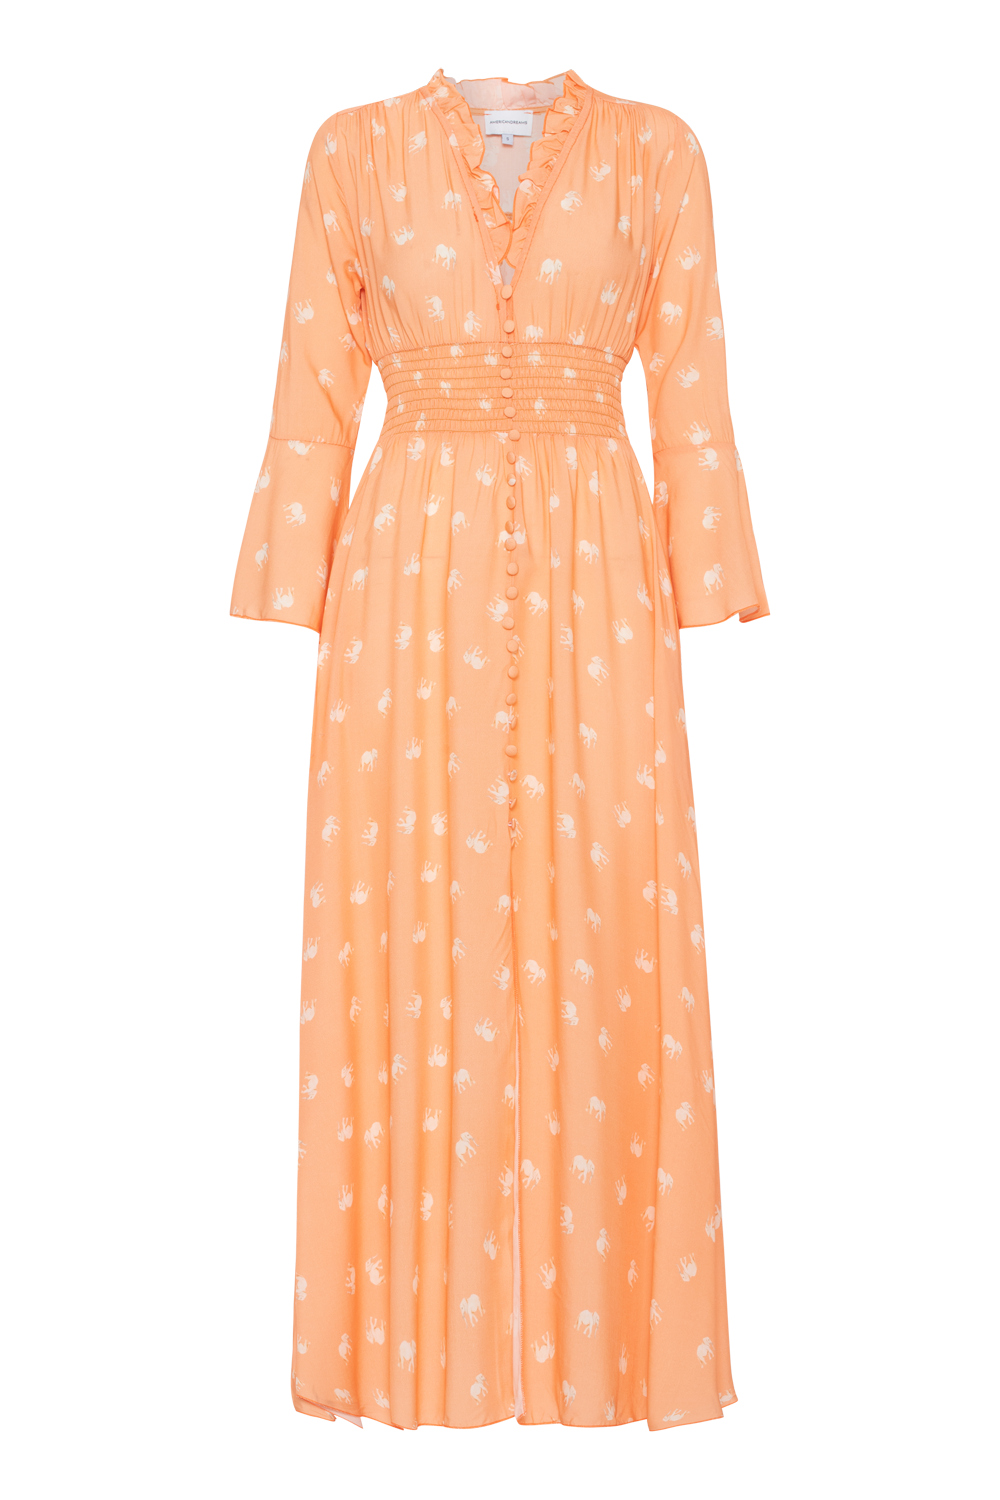 Sally Long Dress Peach W/Elephants